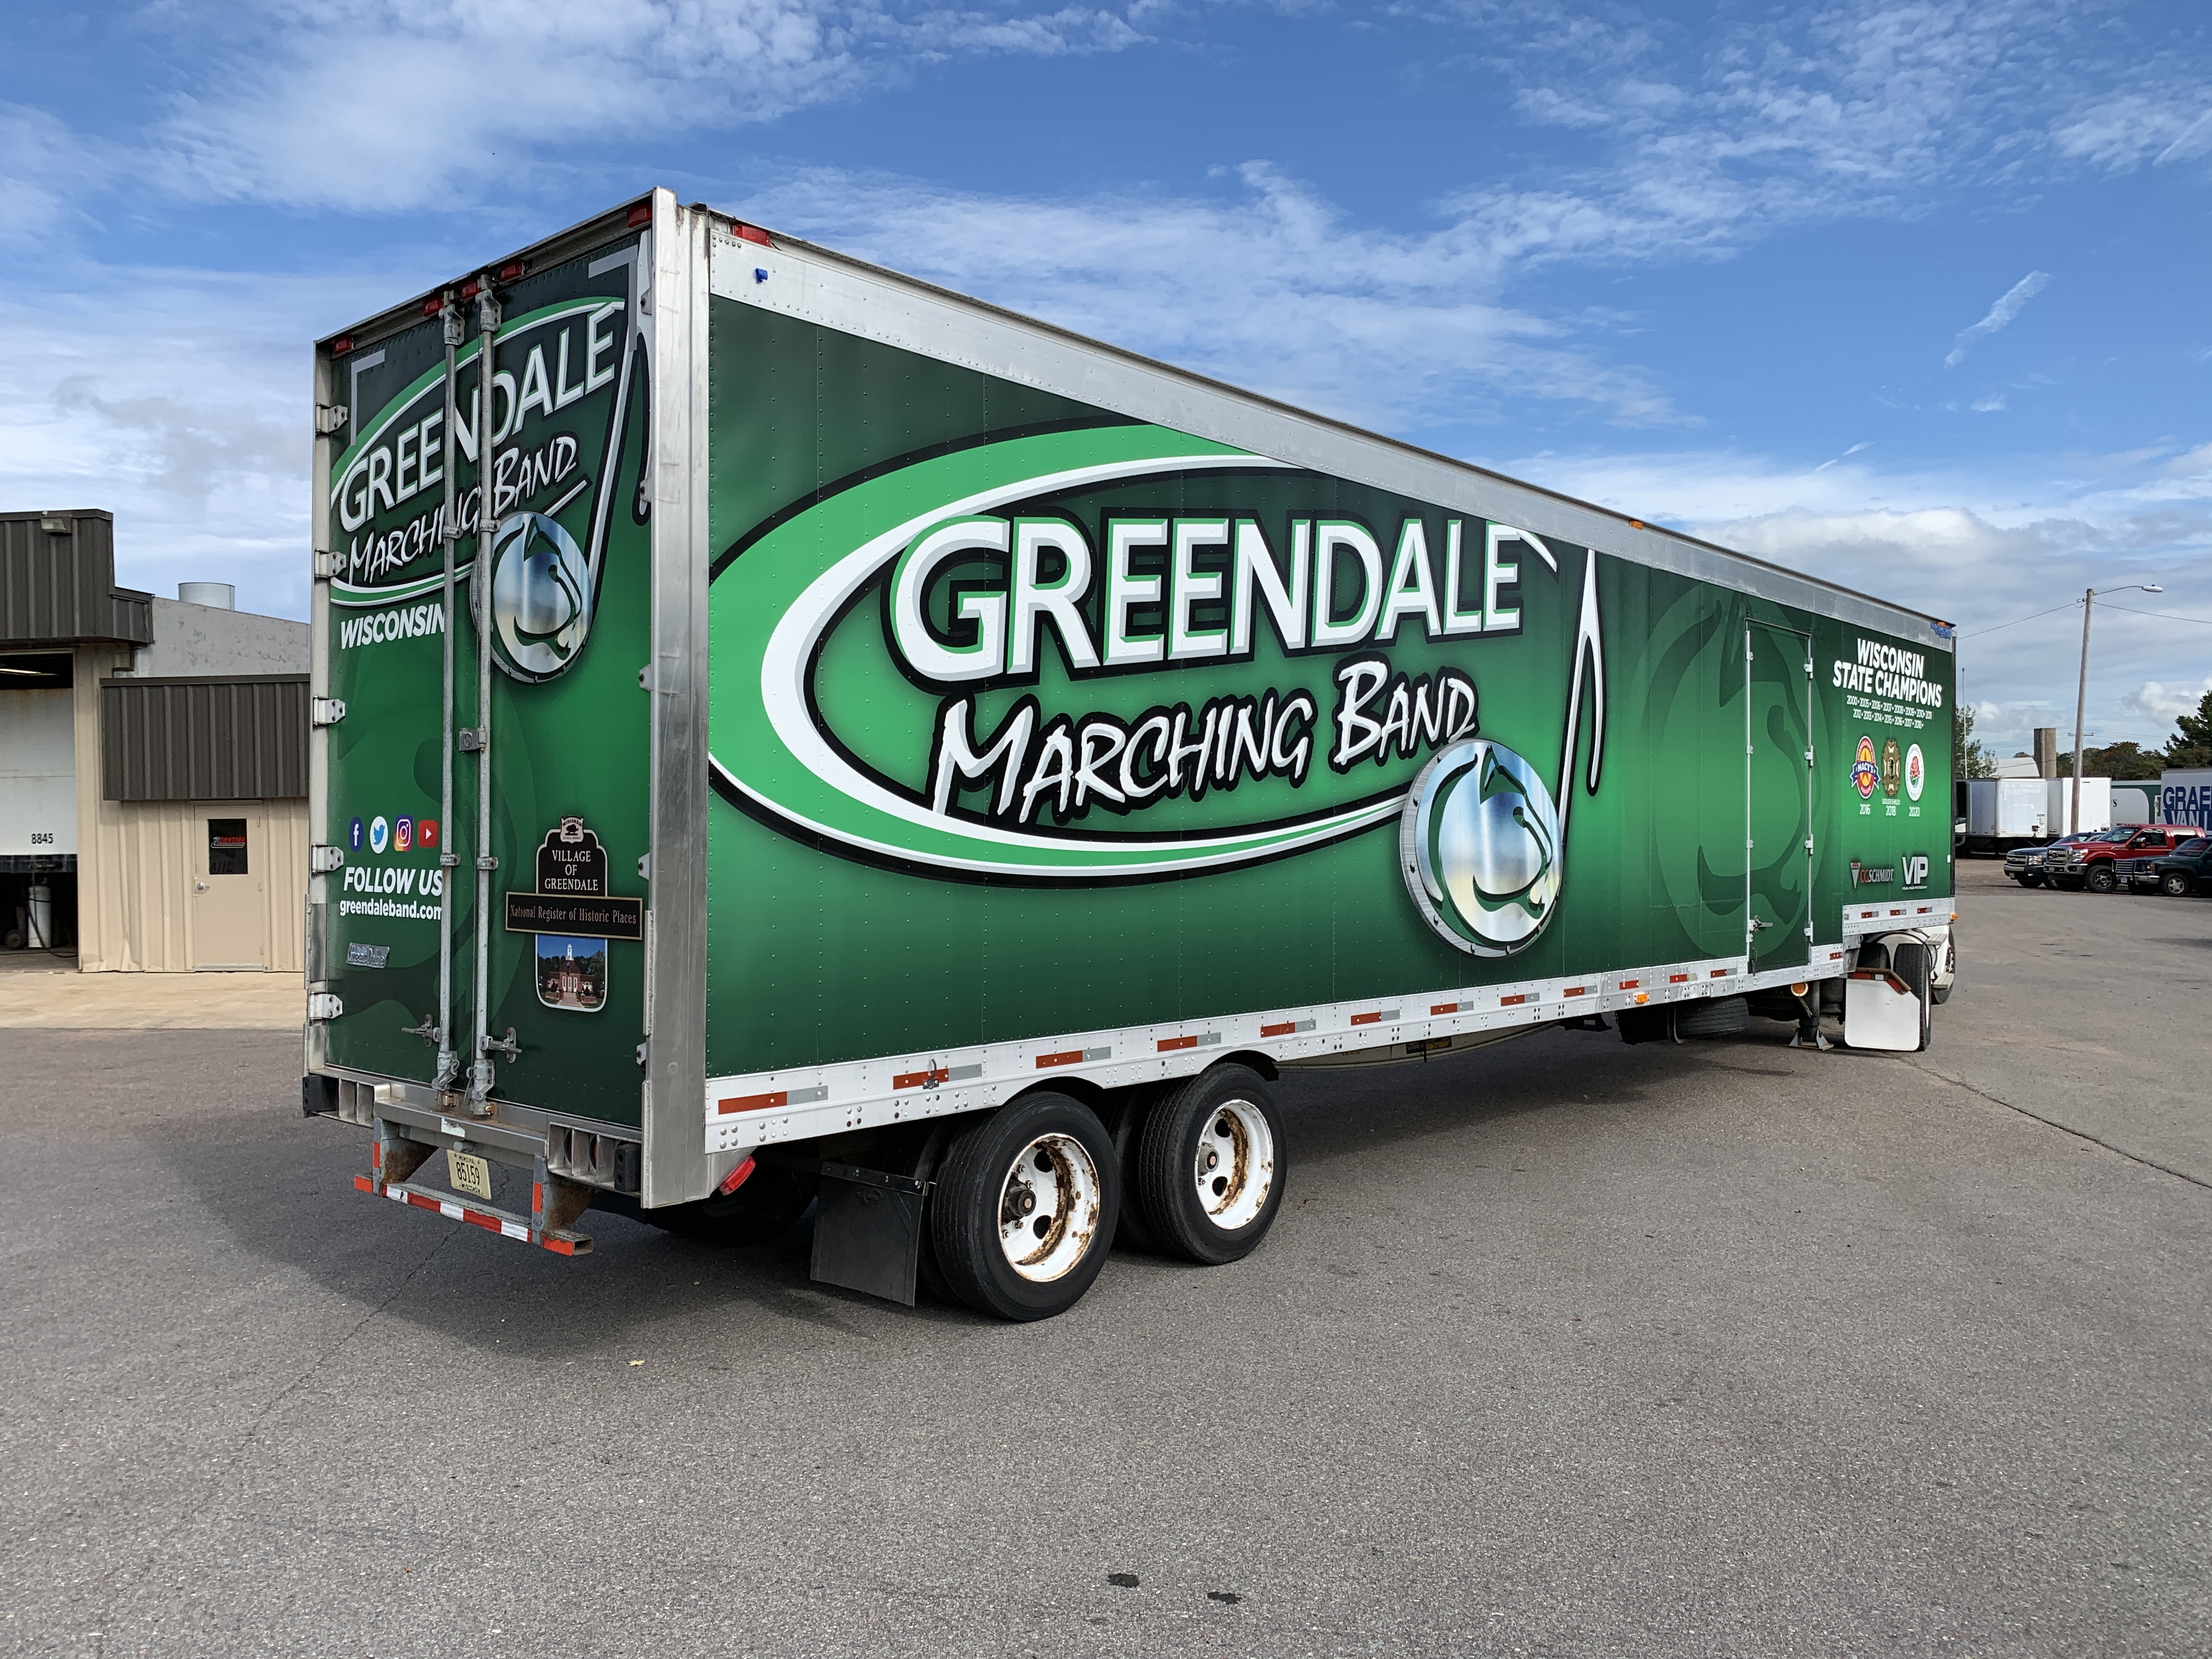 Greendale Marching Band trailer vinyl wrap